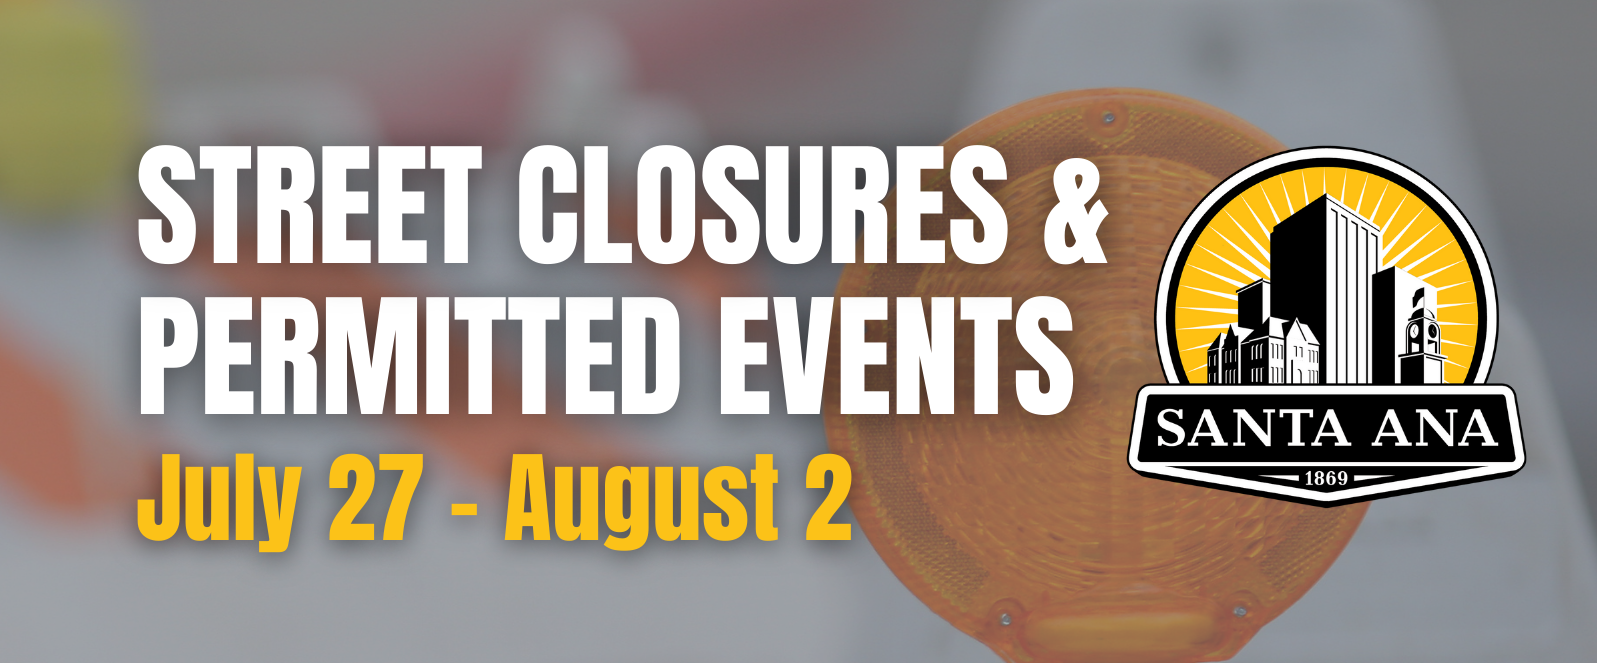 Street closures July 27 through August 2